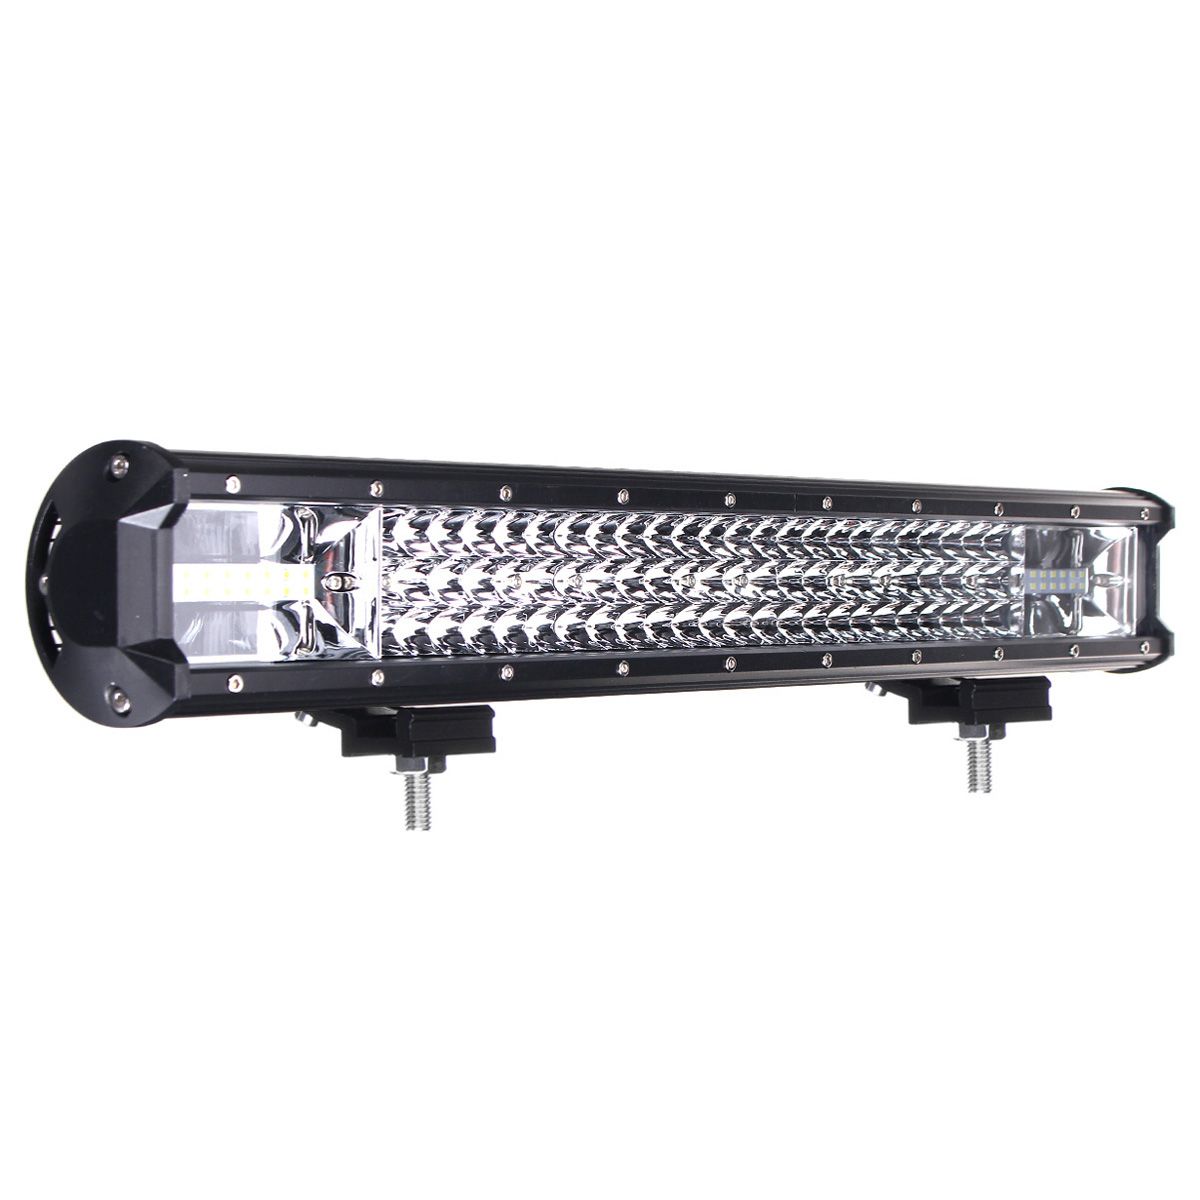 22-Inch-648W-LED-Light-Bars-Flood-Spot-Combo-Beam-Driving-Lamp-for-Truck-Off-Road-Boat-1182903